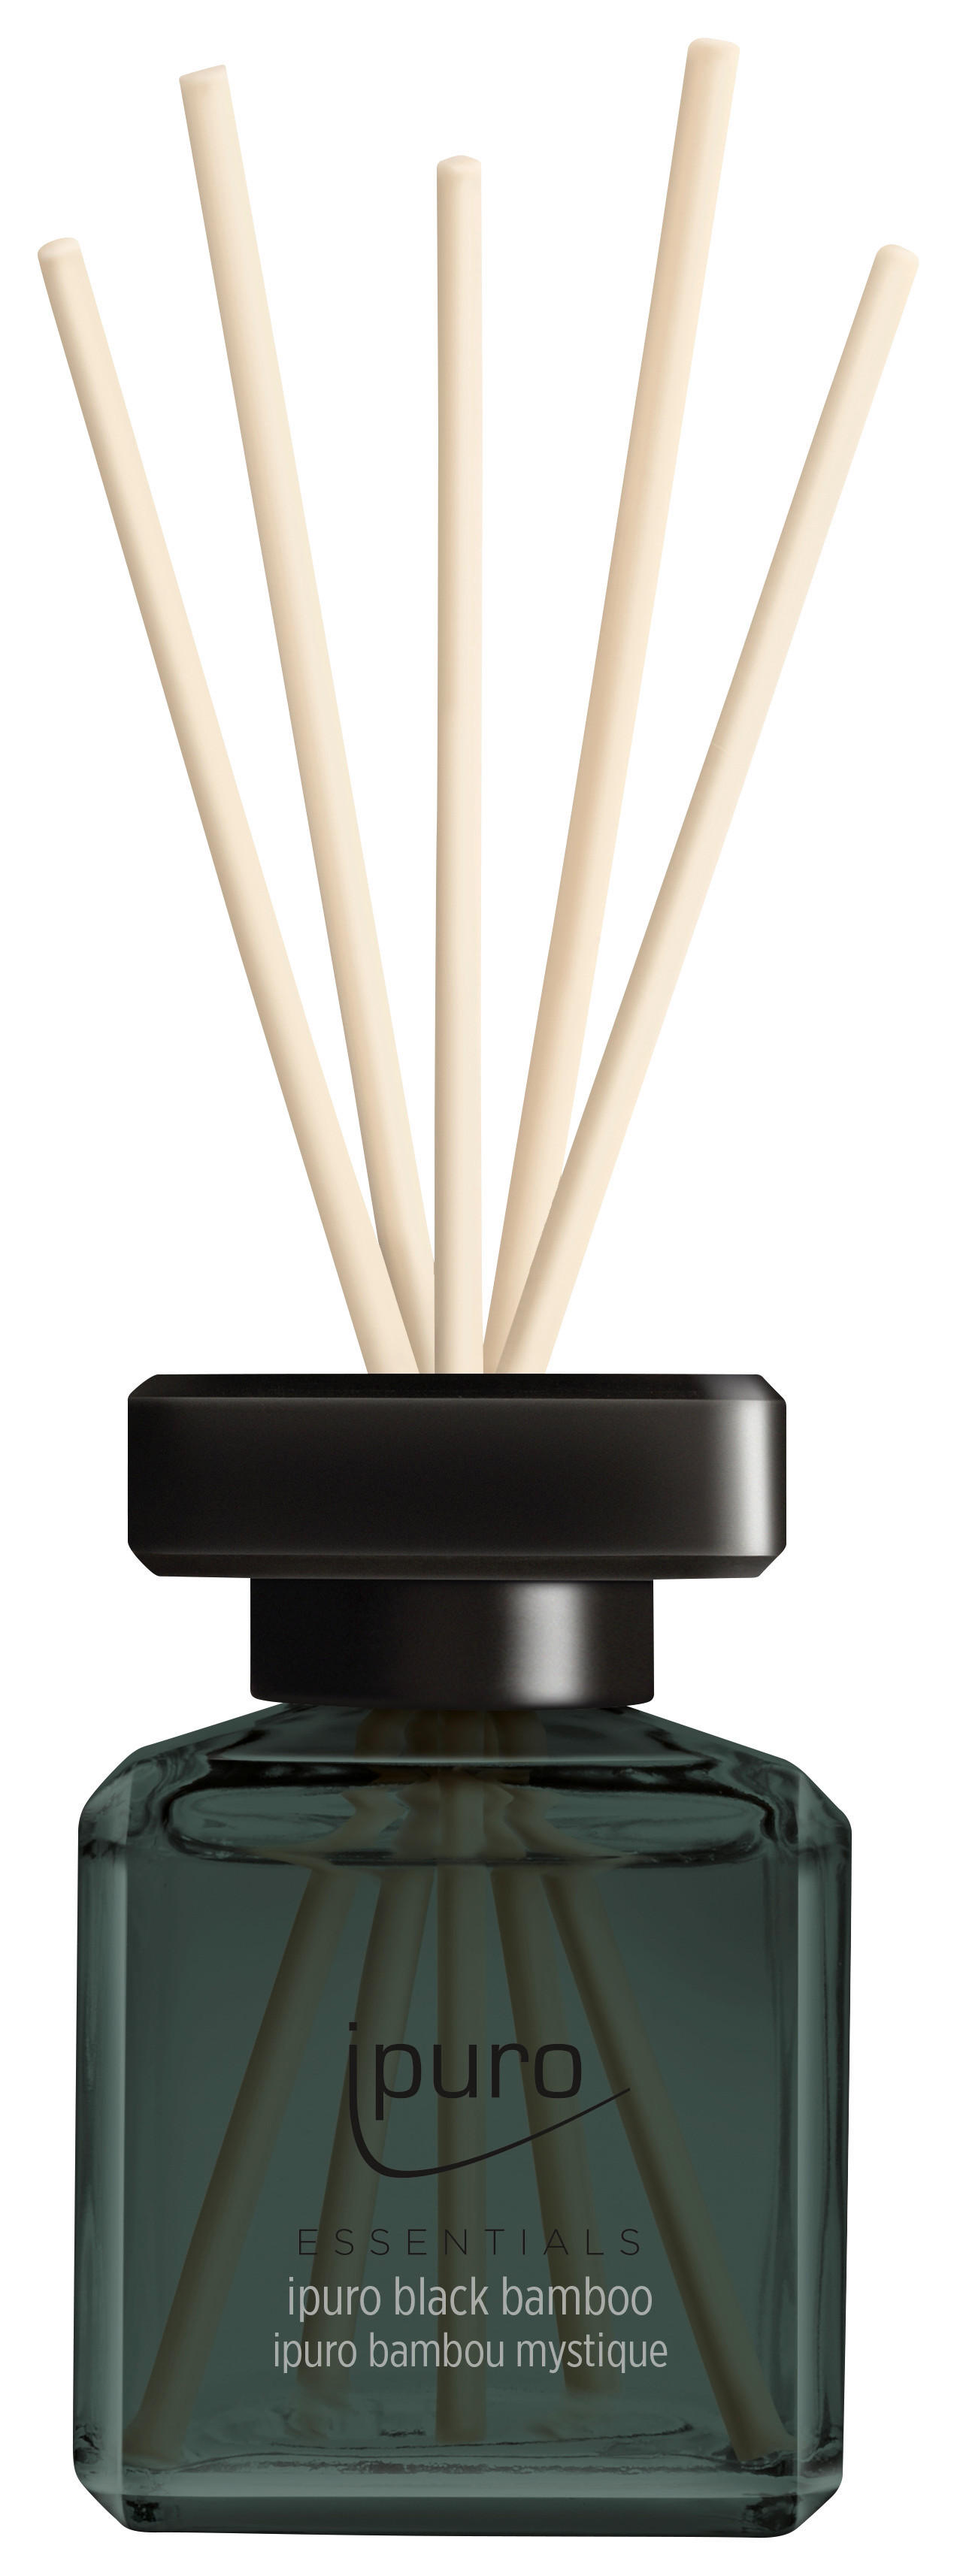 ipuro Essentials Black Bamboo Room Spray - 120 ml